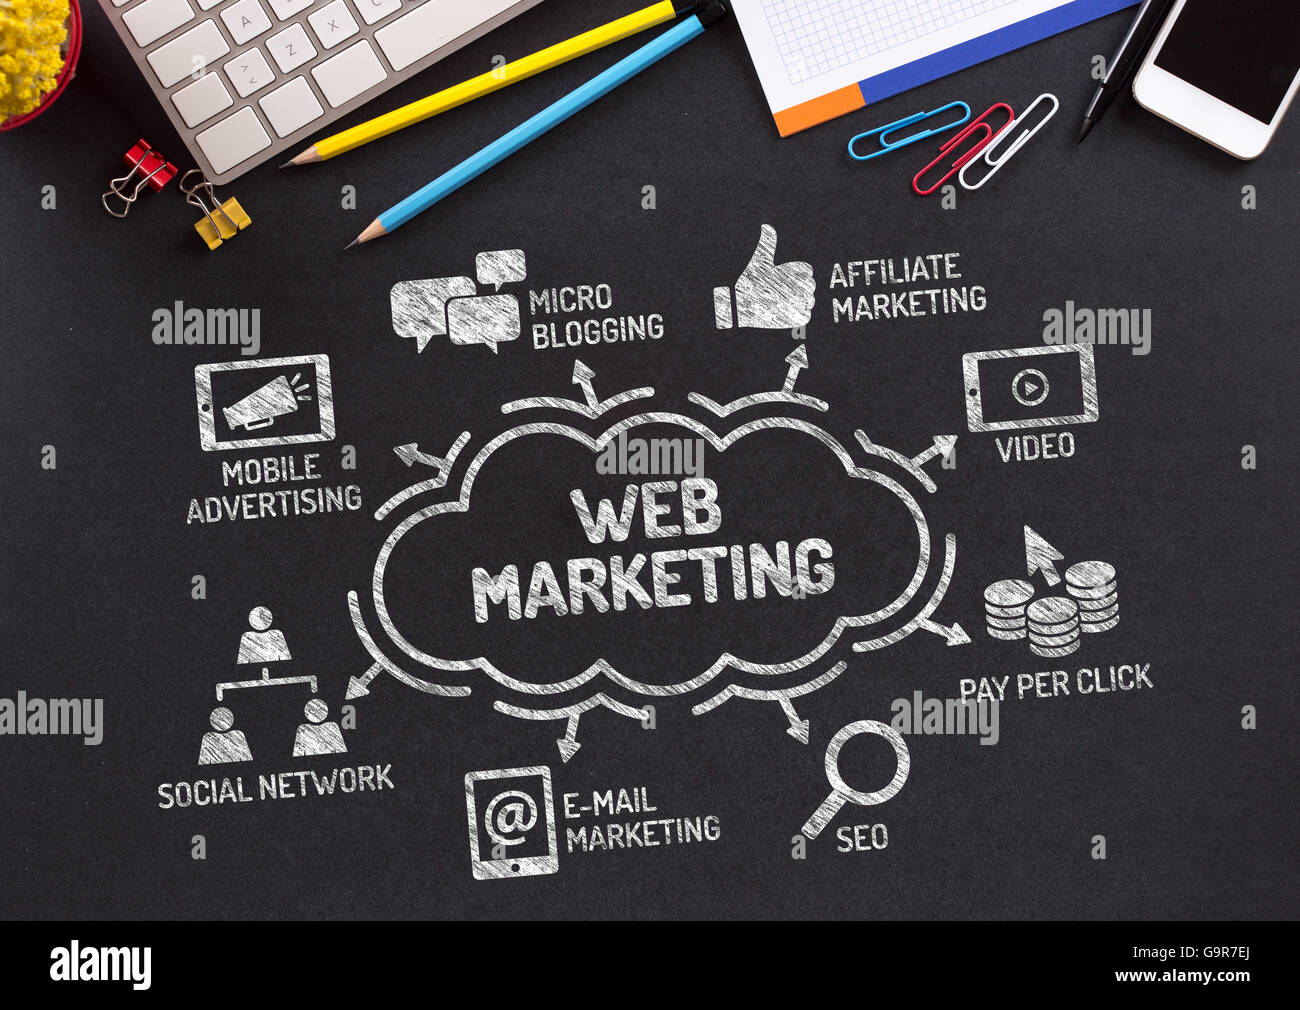 Web Marketing-Diagramm mit Keywords und Symbole auf Tafel Stockfoto